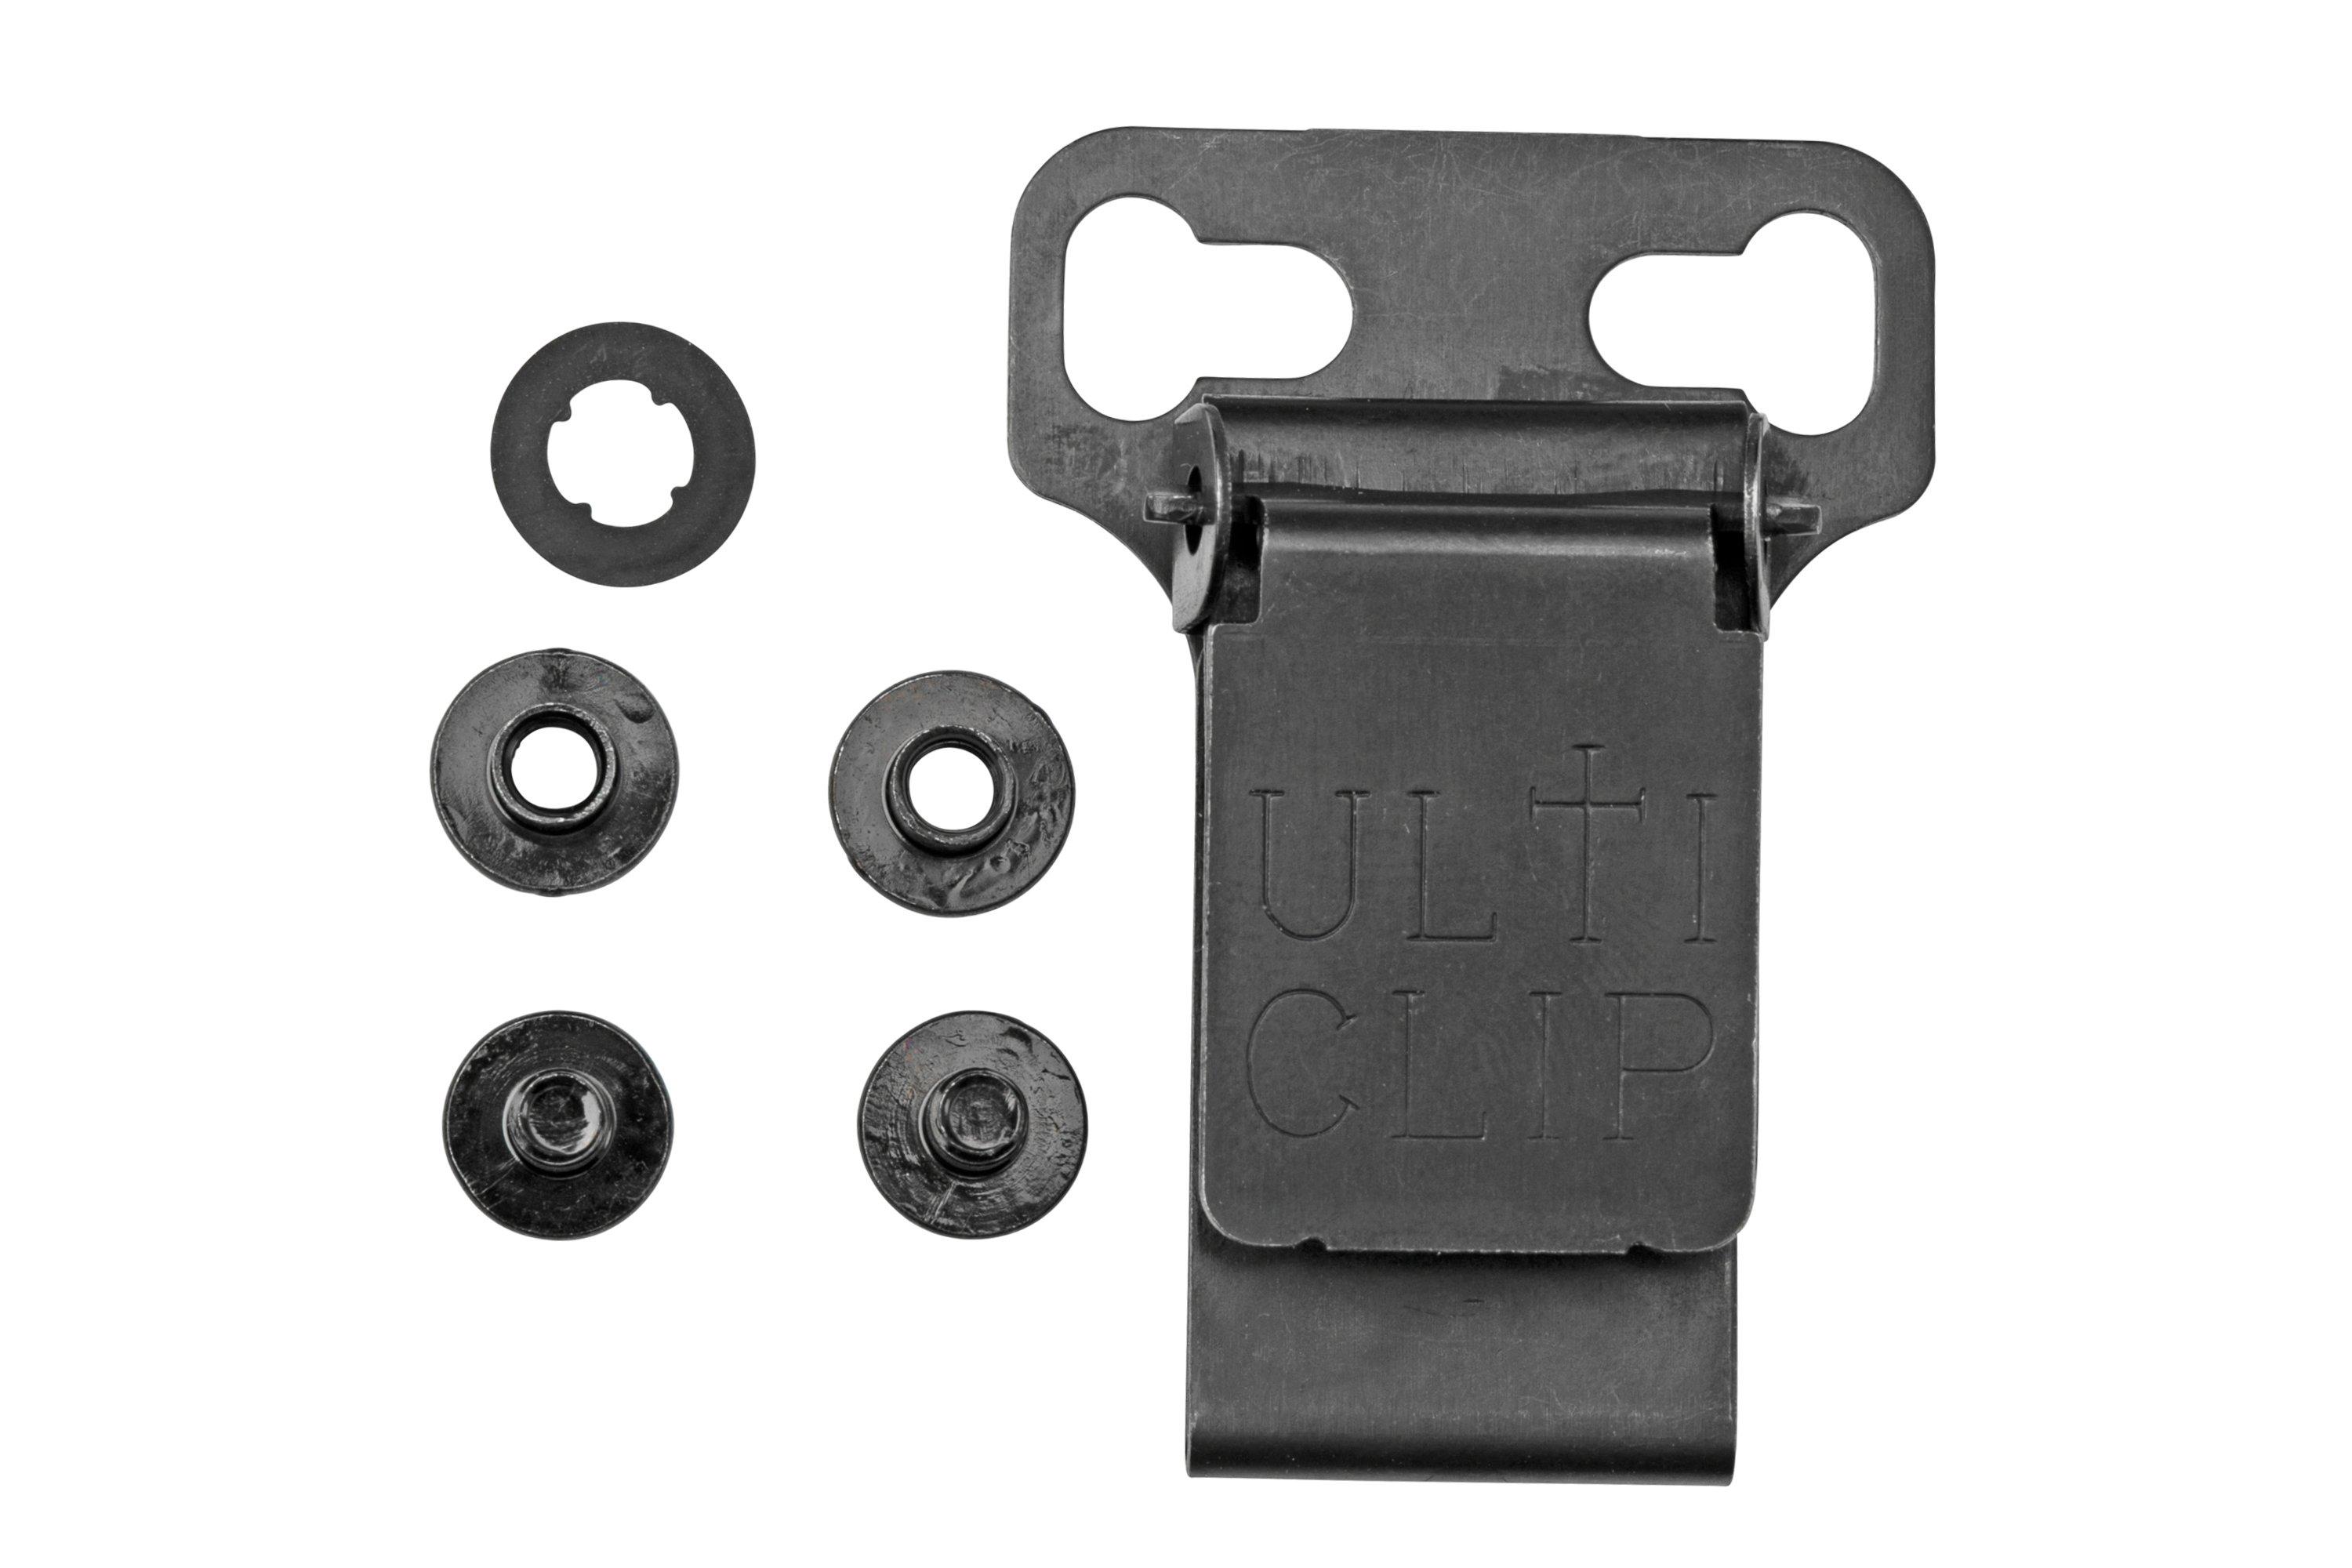 Ulticlip UltiTuck belt clip for sheaths